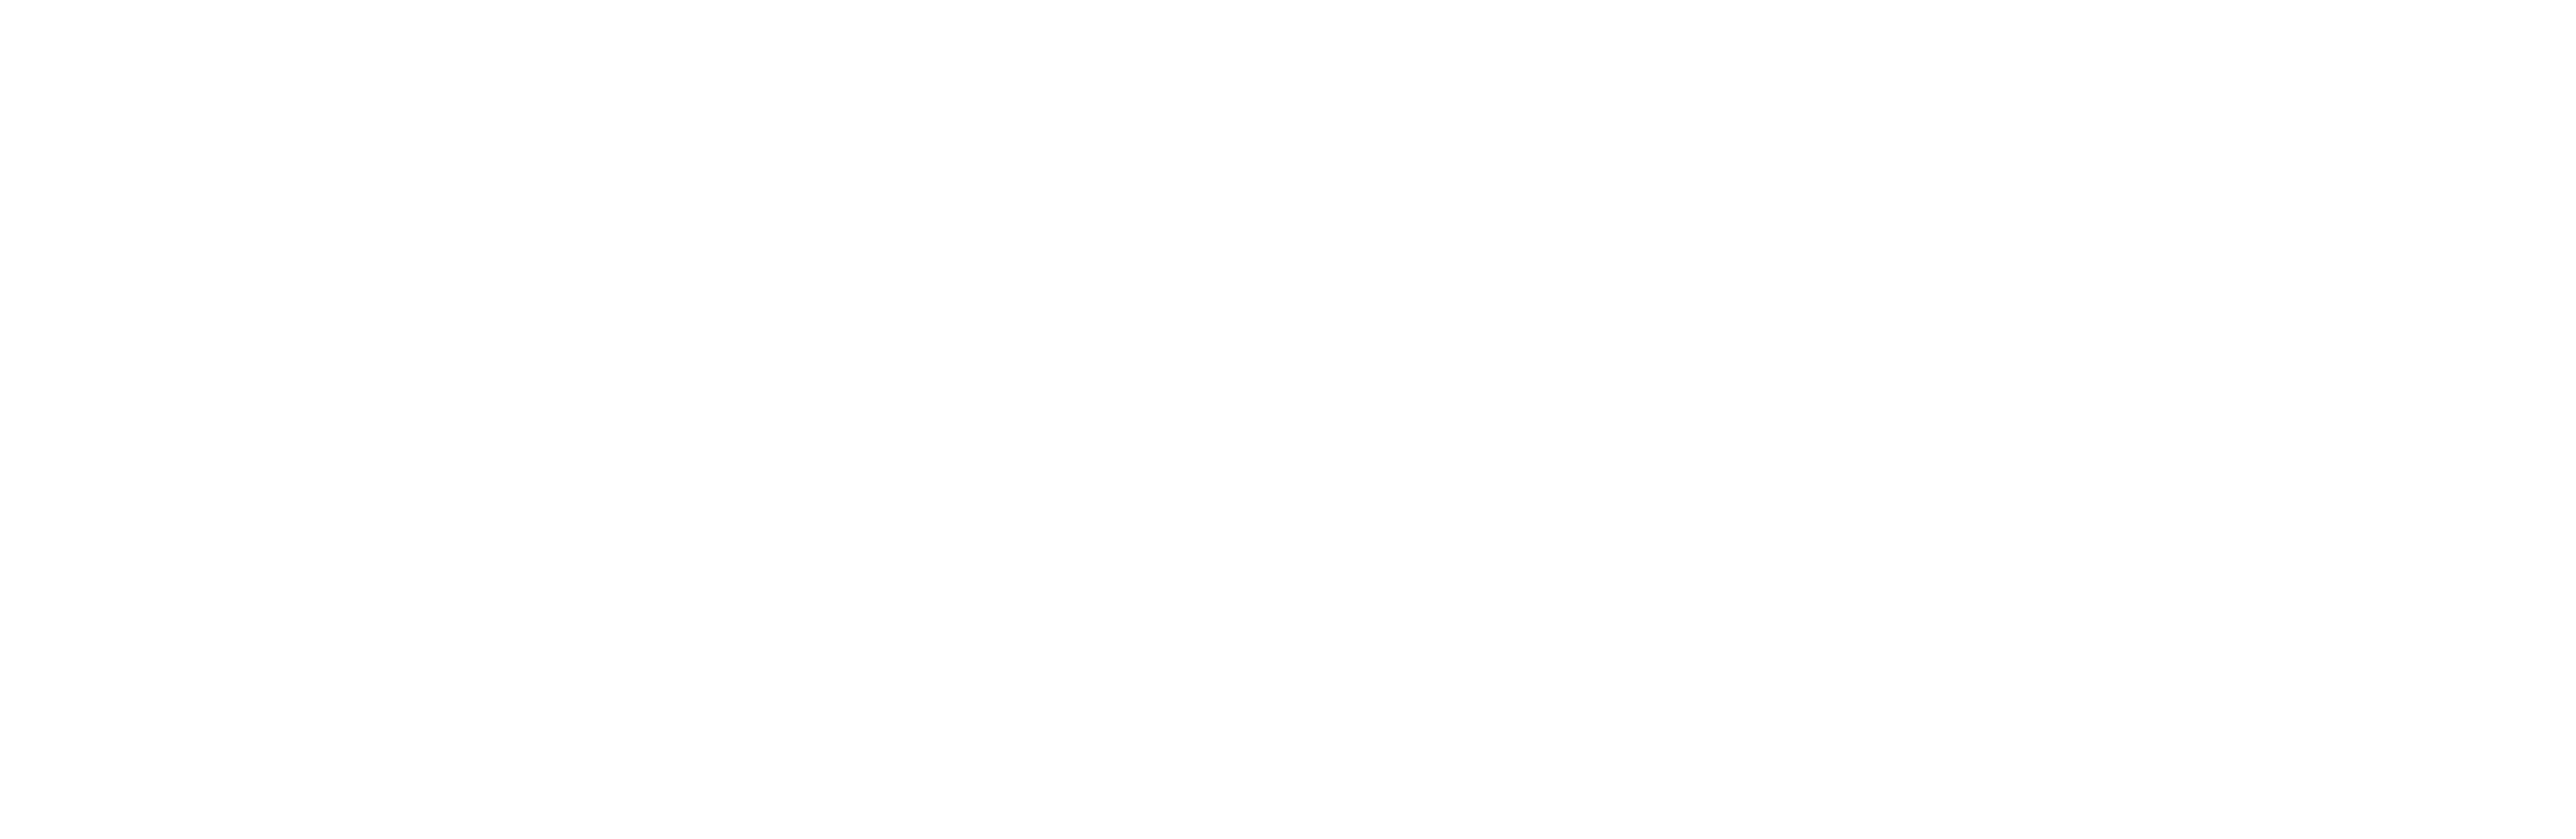 successful innovations logo